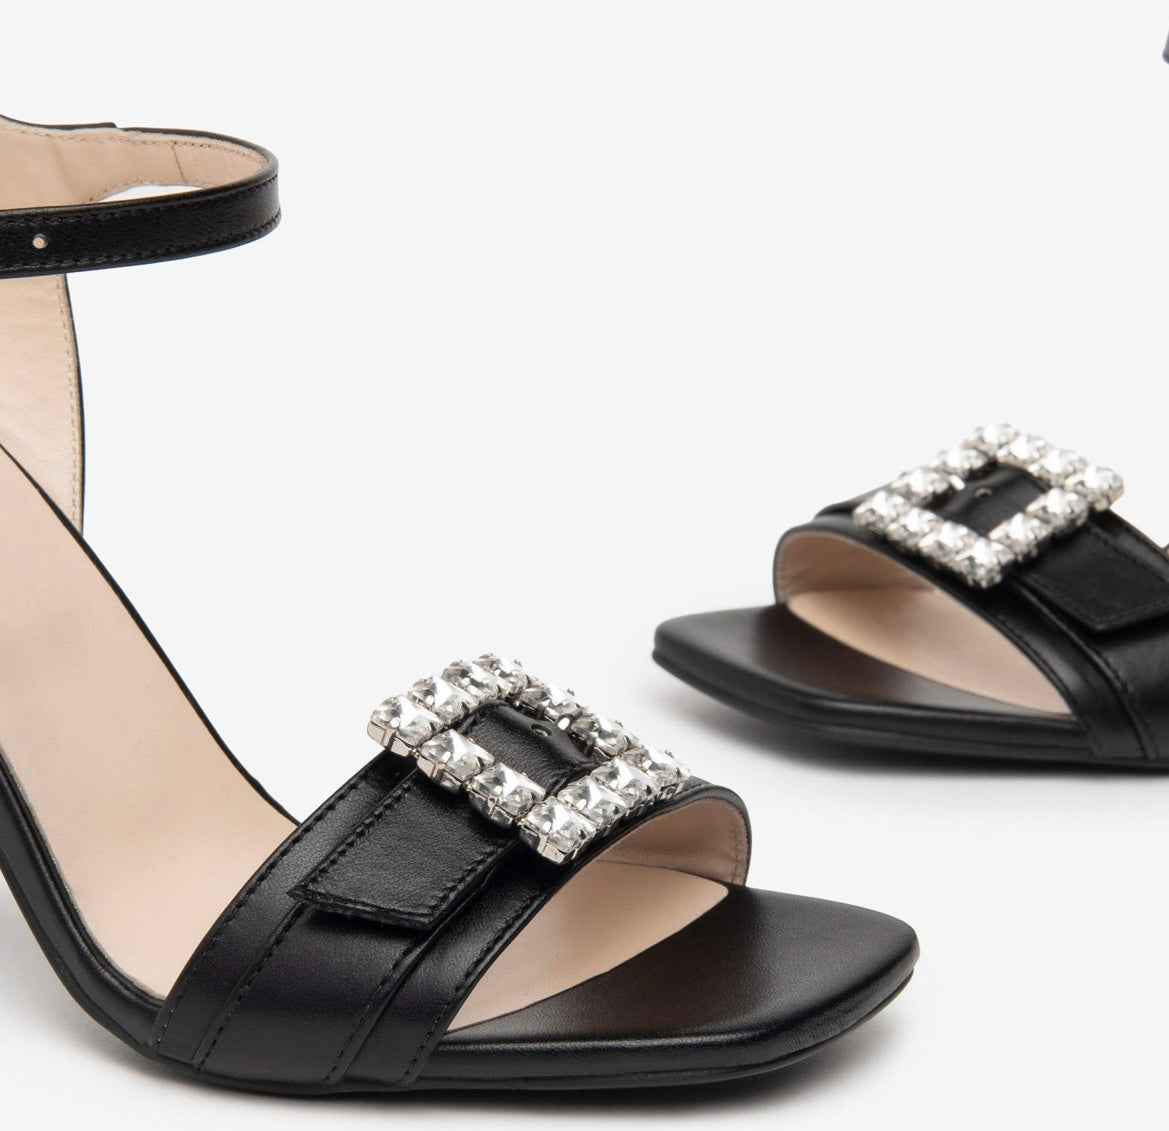 Nerogiardini black leather sandals with diamond detail buckle